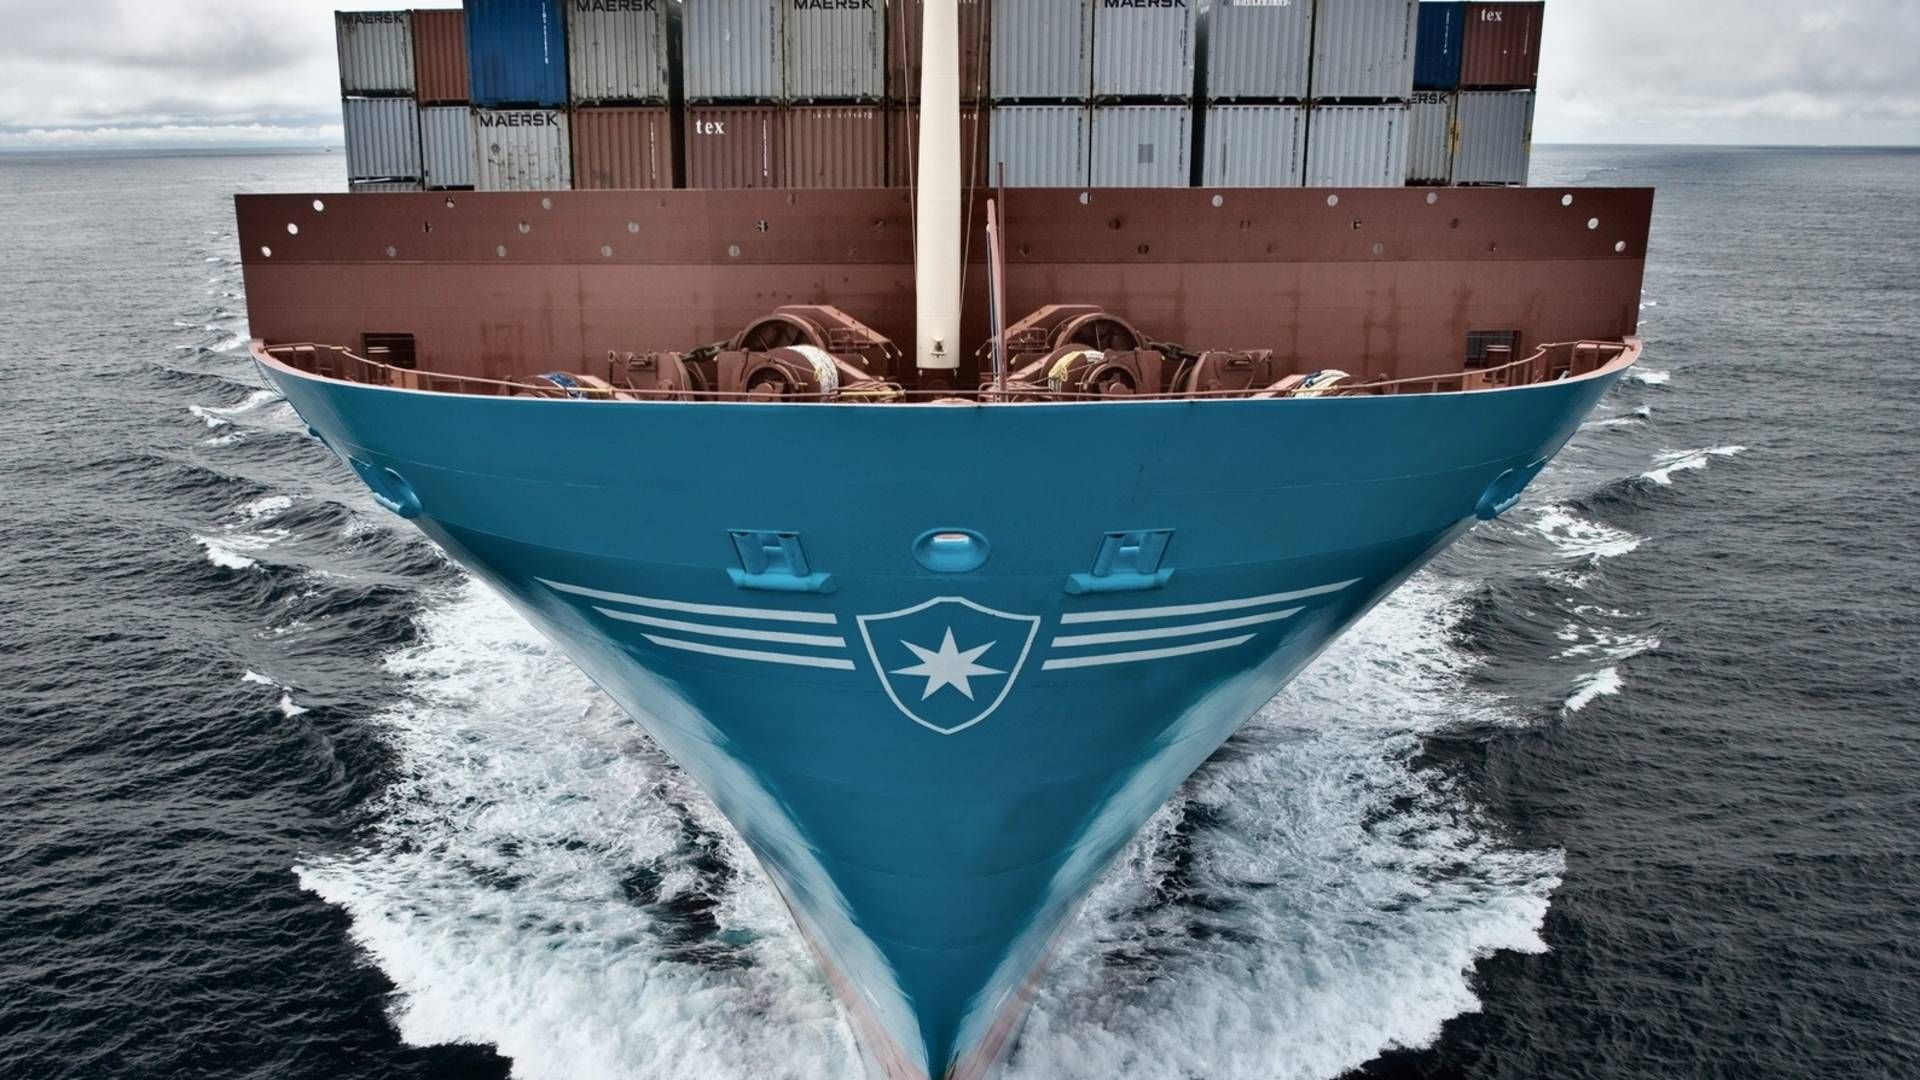 Foto: PR/Maersk